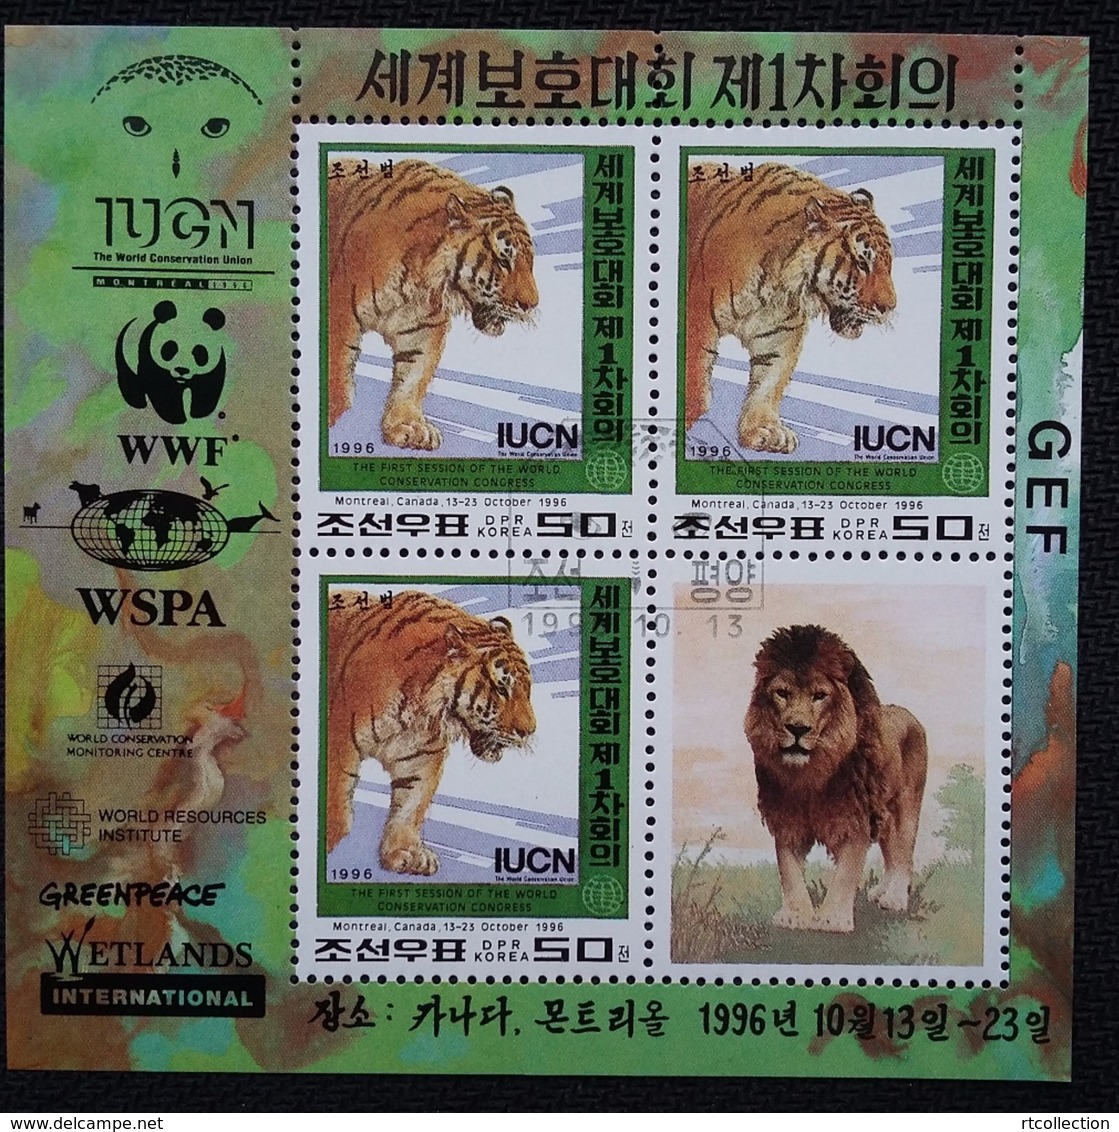 Korea 1996 M/S Wild Animals Nature Conservation Tiger Big Cats Lion Leo W.W.F. WWF IUCN Organizations Stamps CTO Mi 3874 - Gebruikt